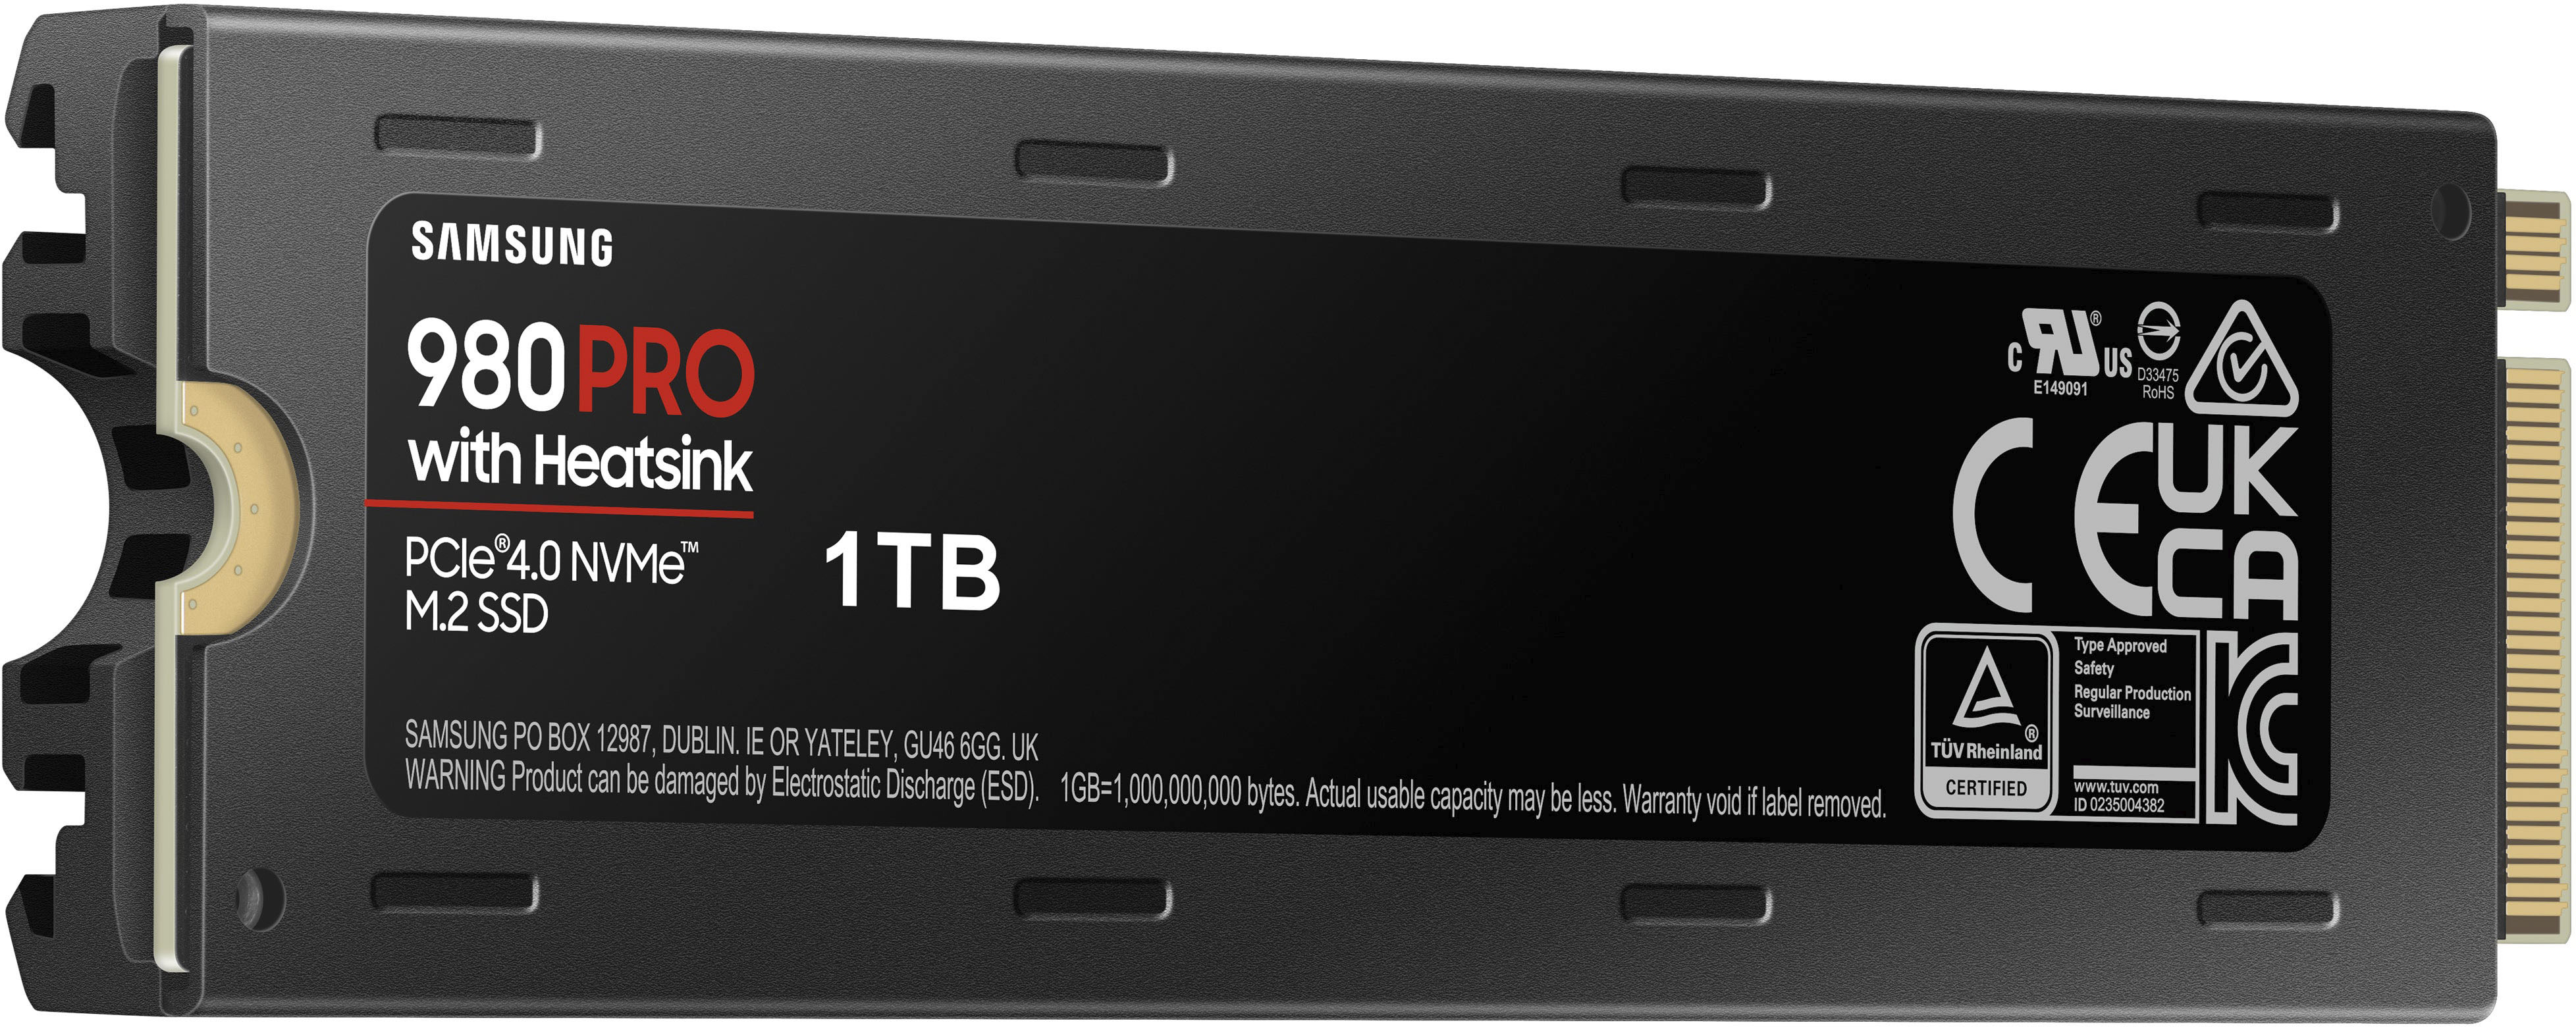 Samsung 980 Pro Heatsink 1tb Pcie Gen 4 0 X4 Nvme 1 3c Internal Gaming Ssd M 2 For Laptops And Desktops Mz V8p1t0cw Best Buy